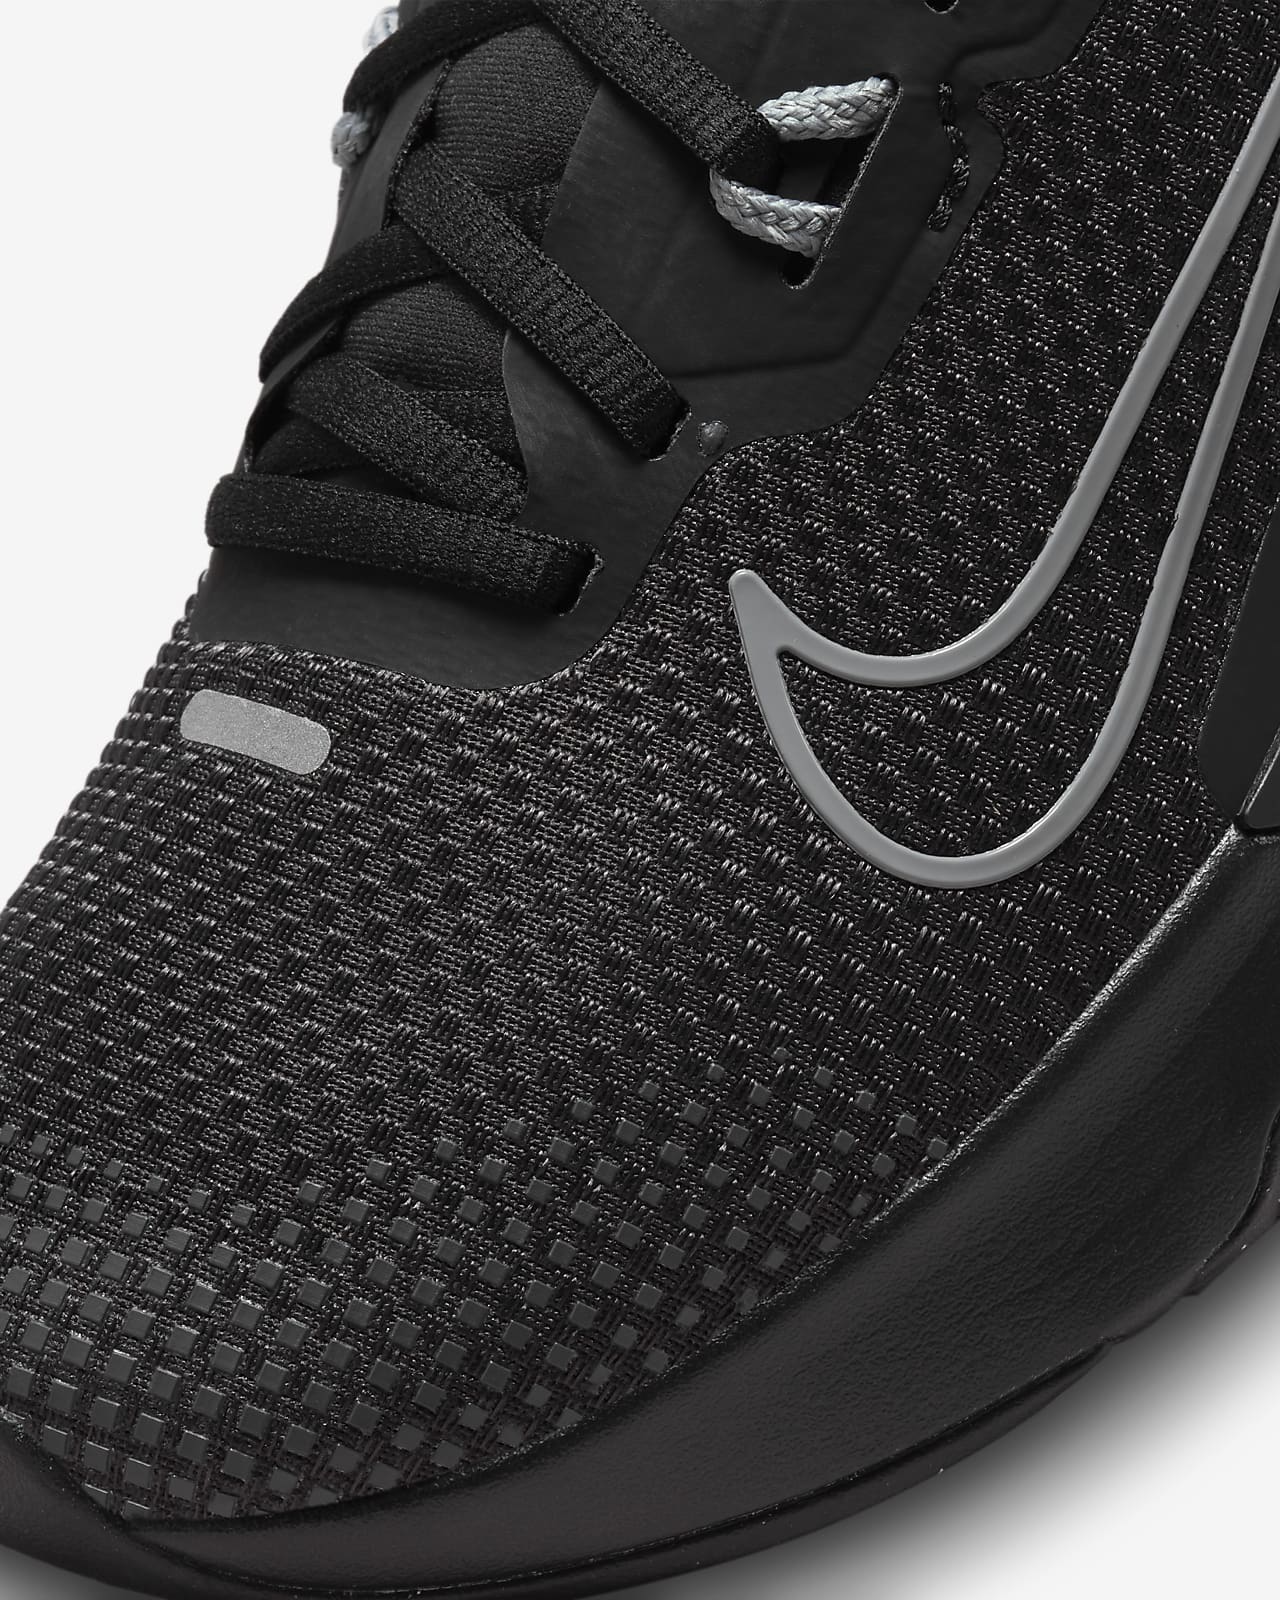 Nike Juniper Trail 2 GORE-TEX Men's Waterproof Trail Running Shoes